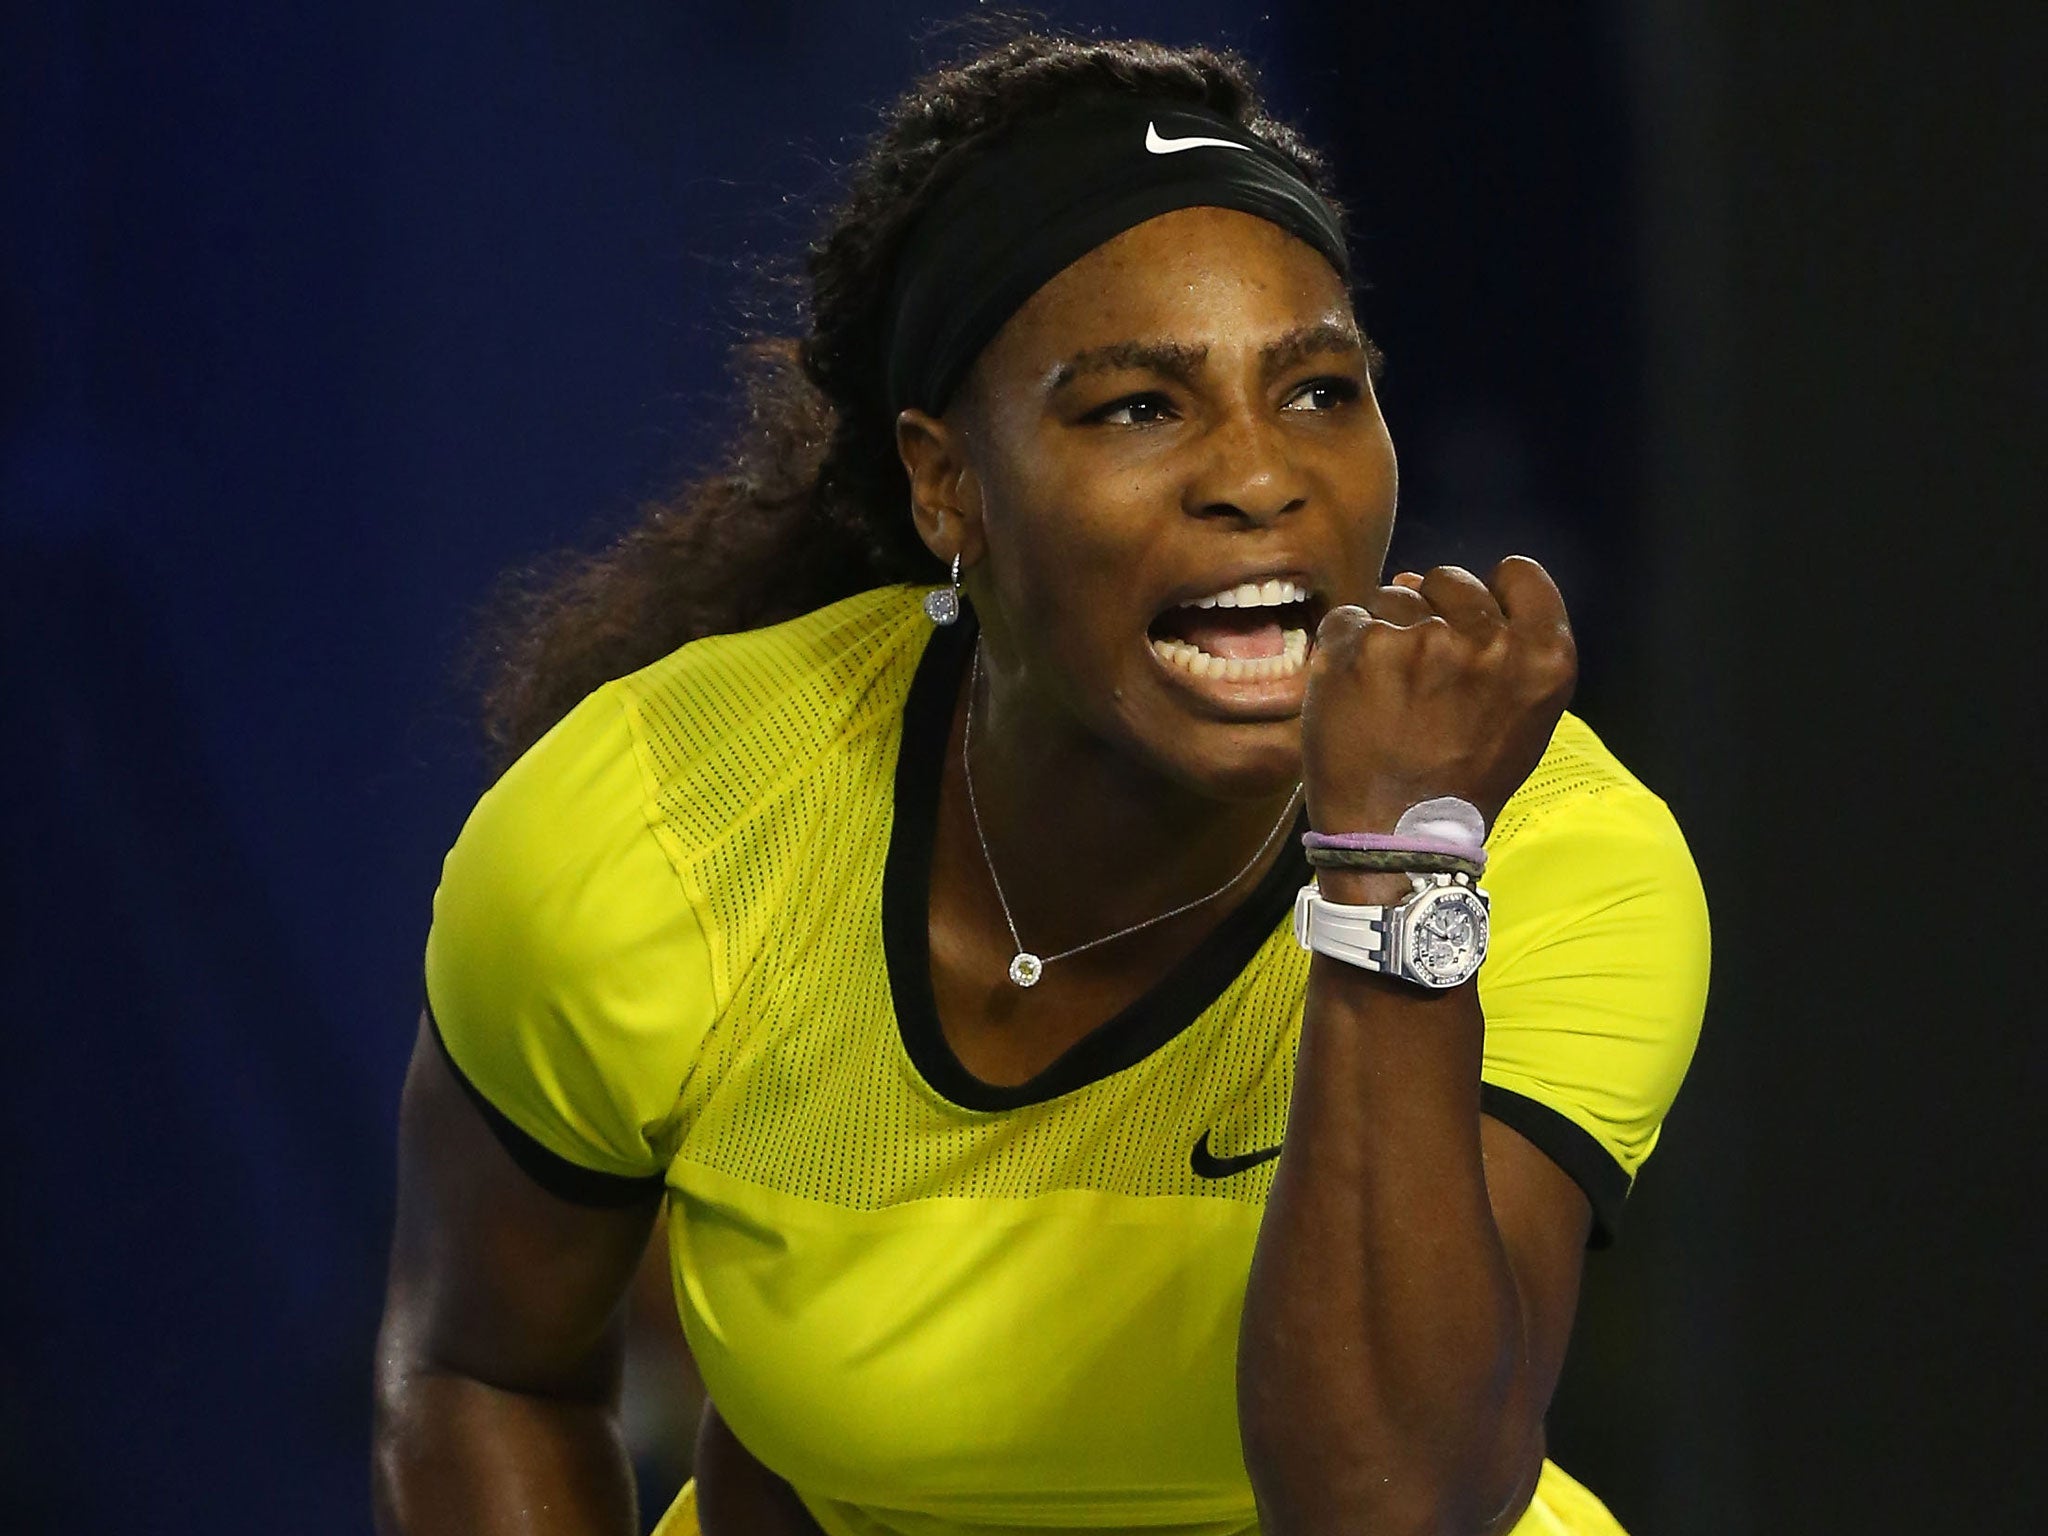 Serena Williams beat Agnieszka Radwanska in the Australian Open semi-finals